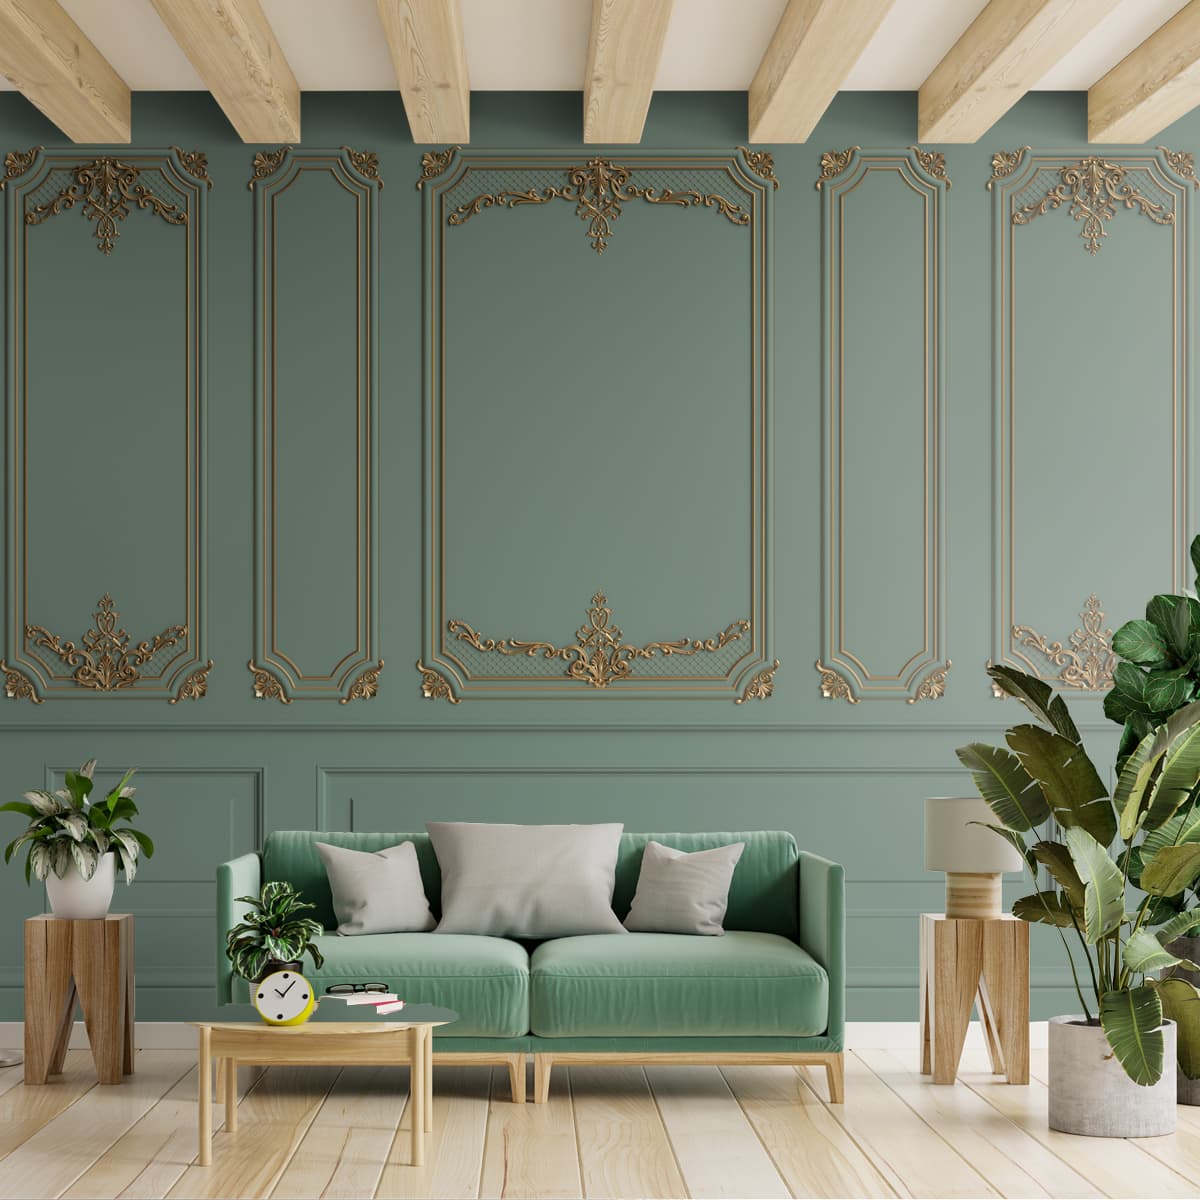 3D Molding Decorative Room Wallpaper, Green, Customised